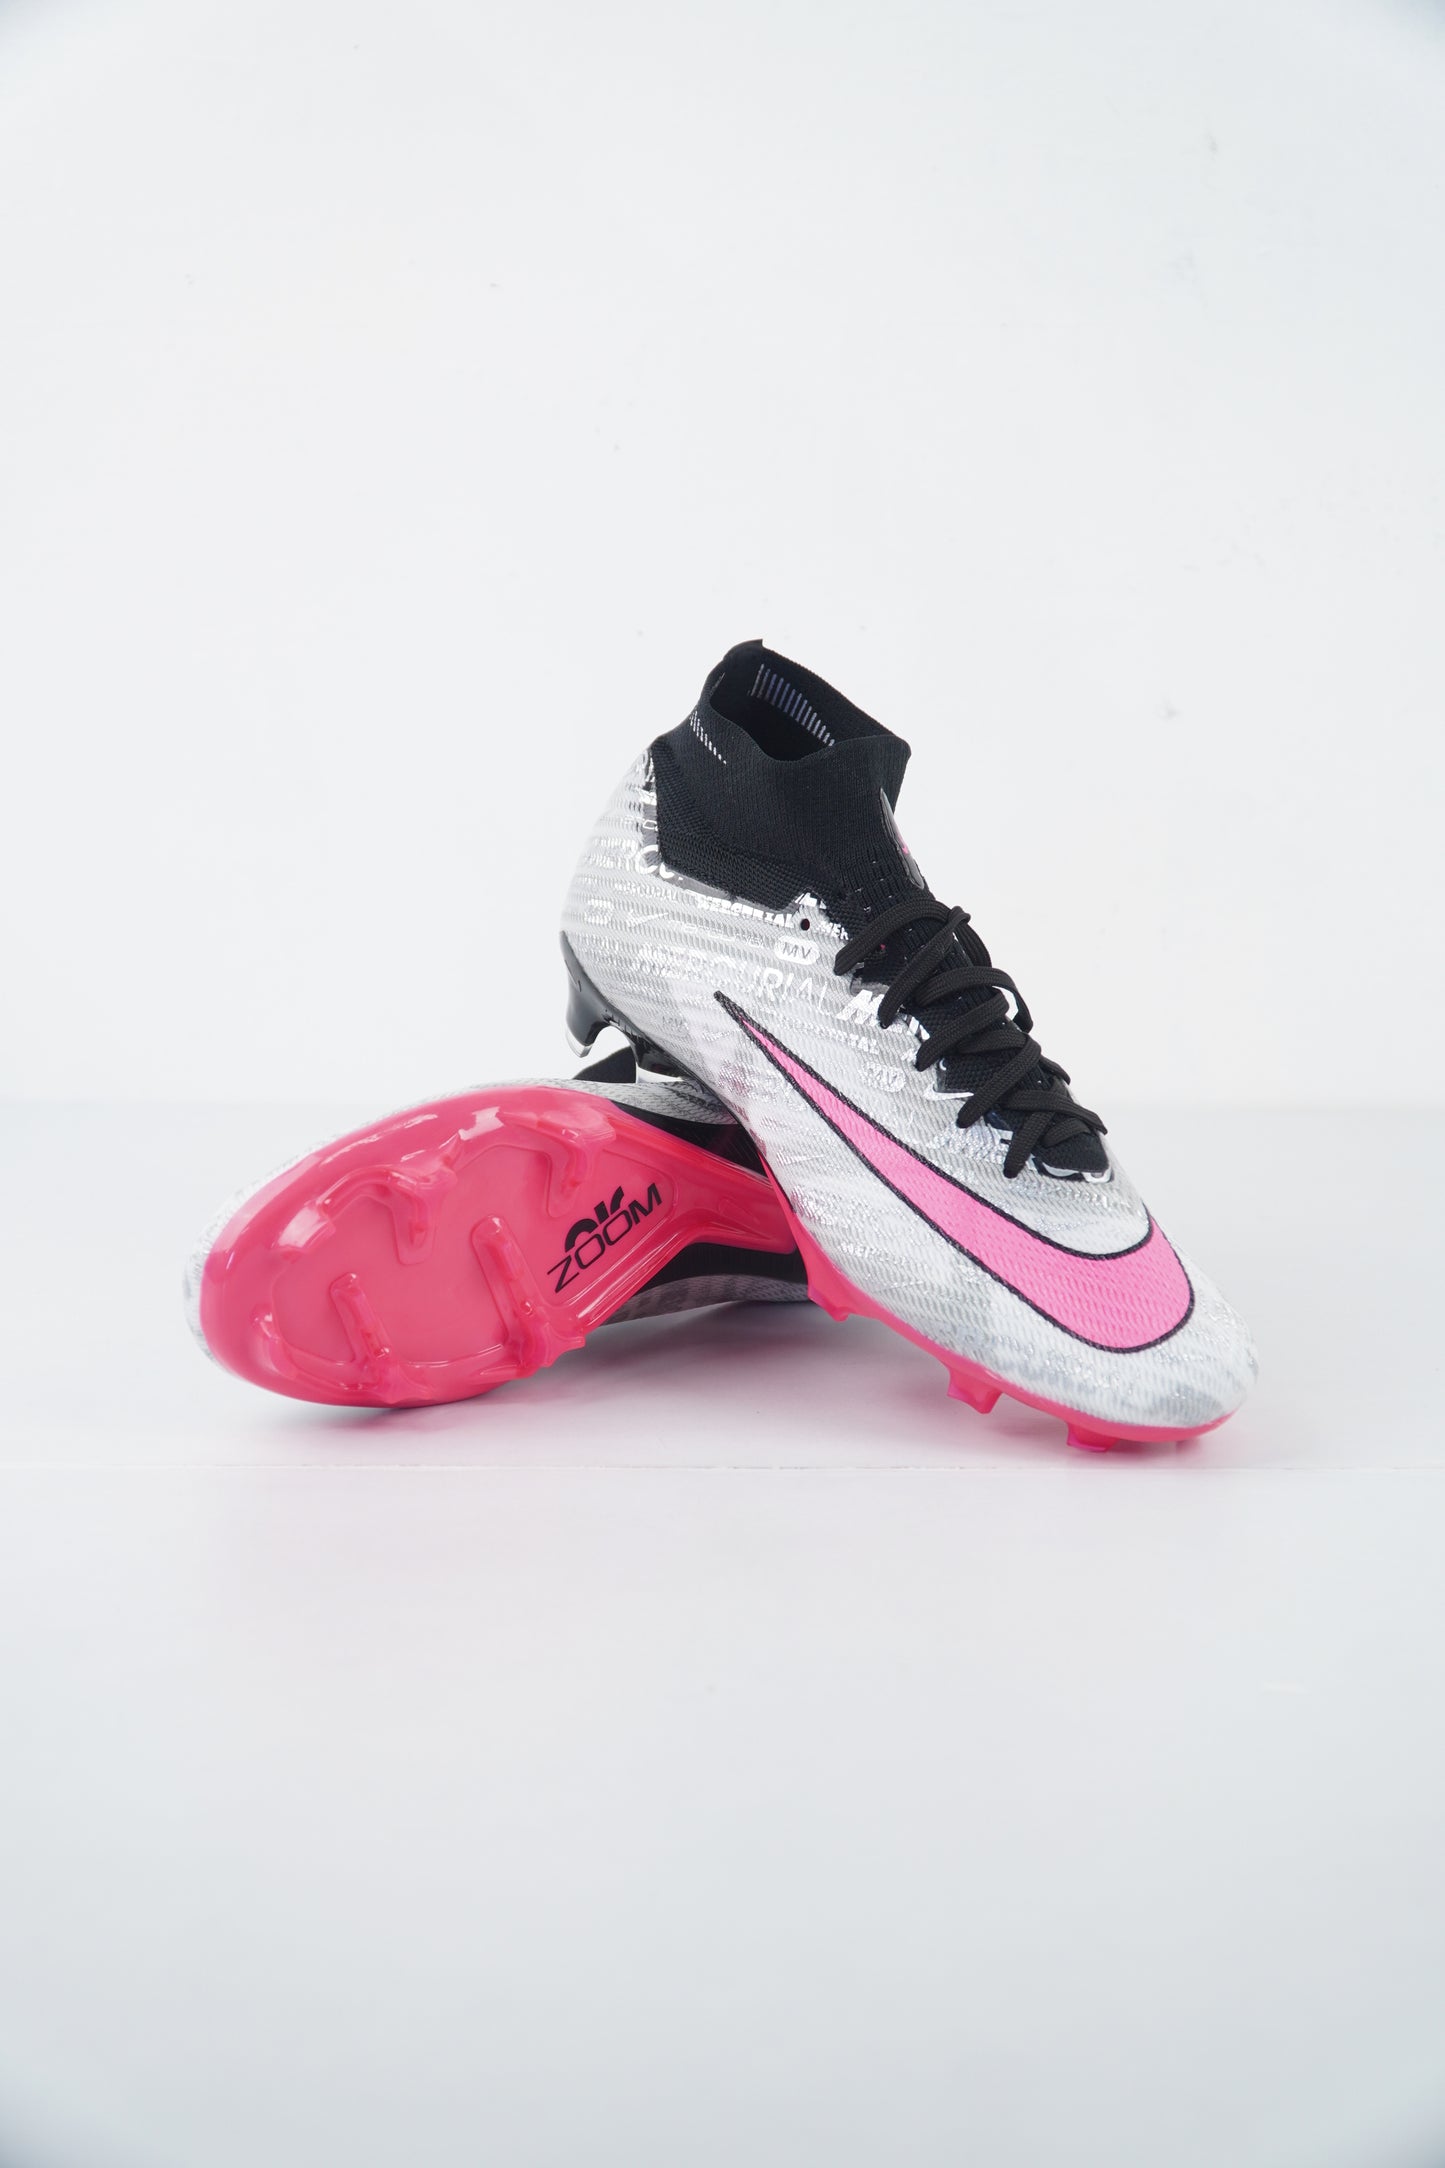 Nike Mercurial Air Zoom FG Silver & Pink Football Shoes